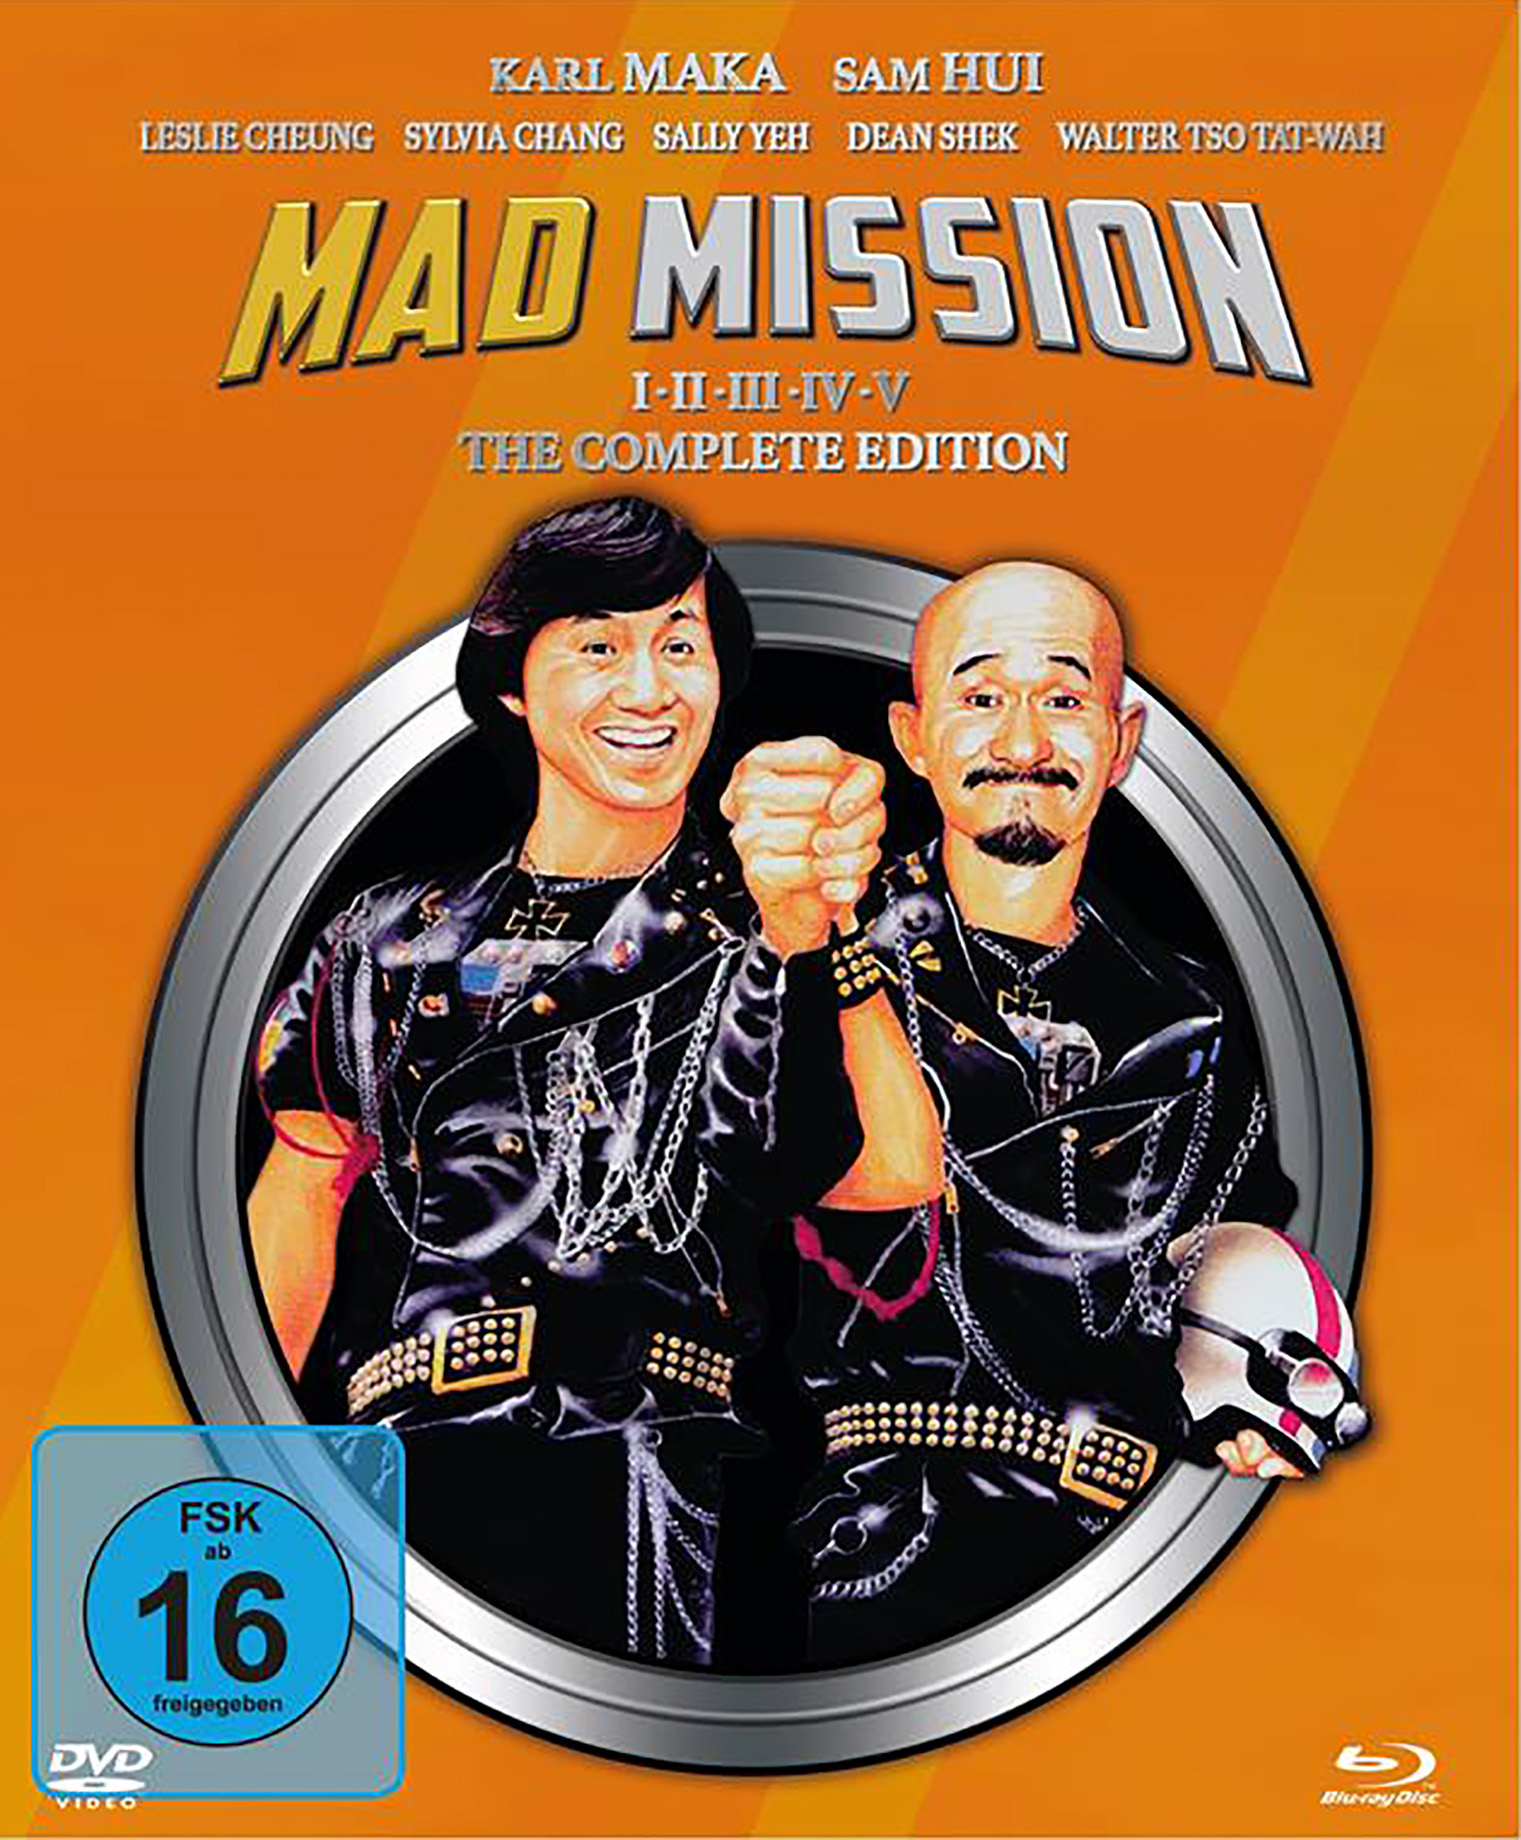 MAD MISSION Part 1 DVD + 5 Blu-ray 